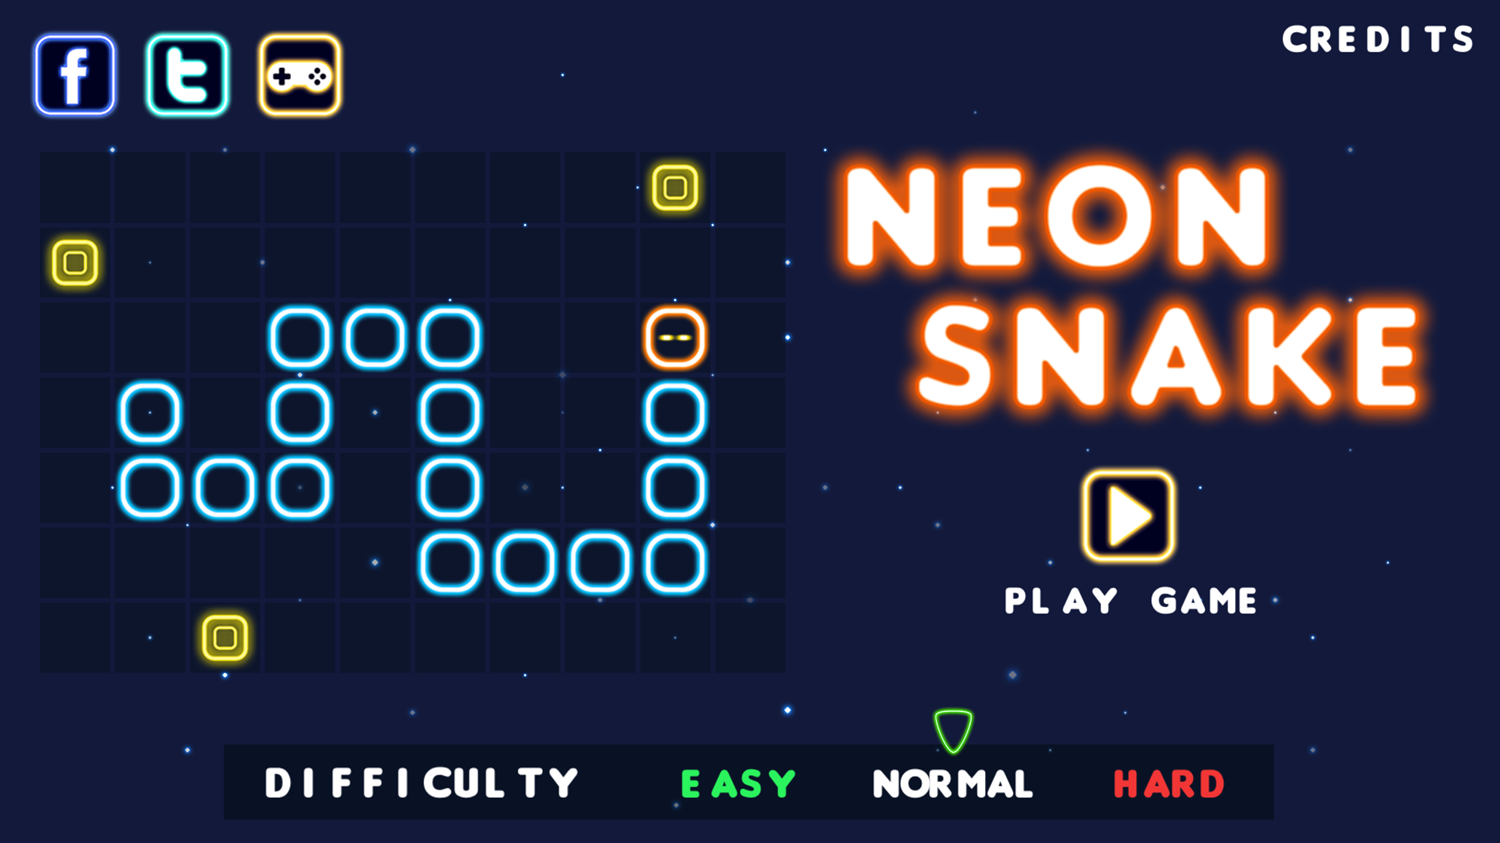 Neon Snake Game Welcome Screenshot.